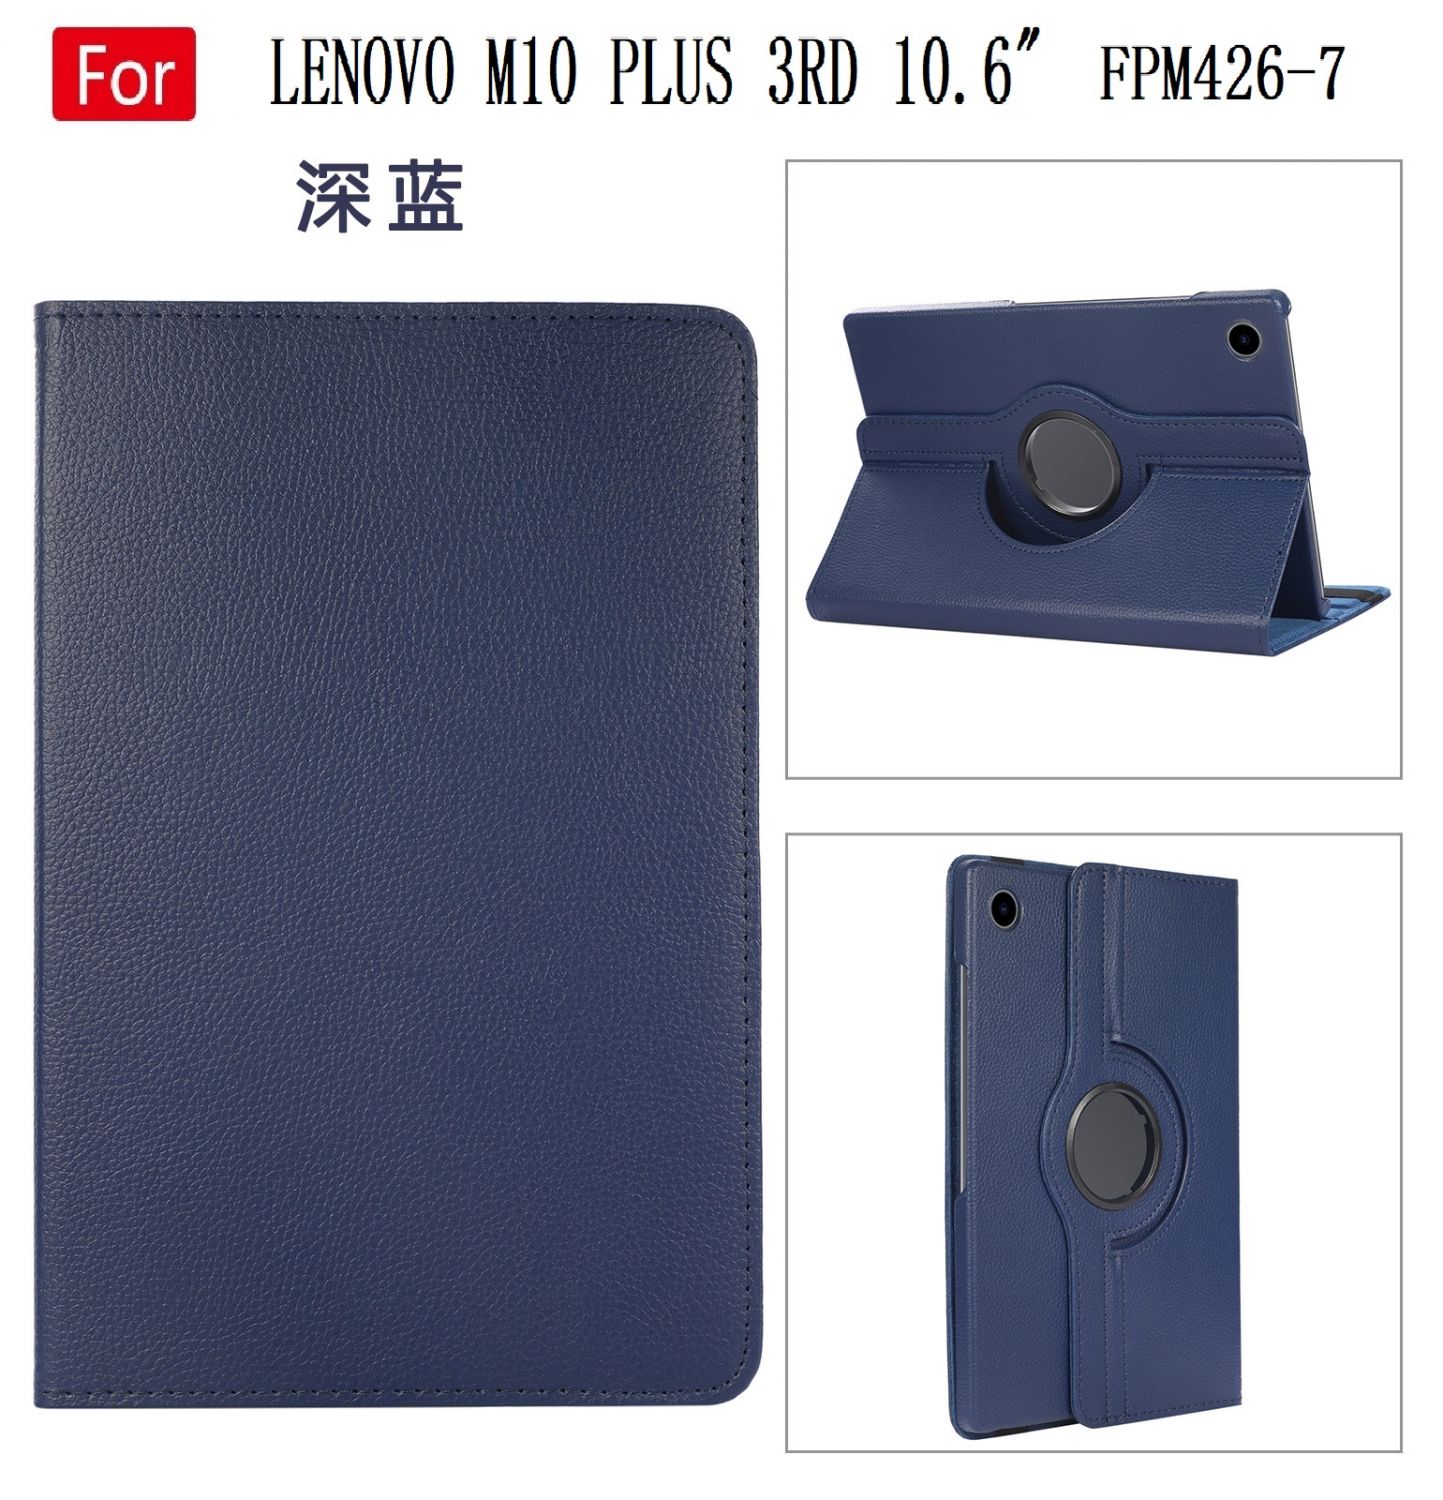 Funda Giratoria para Lenovo M10 Plus 3RD 10.6